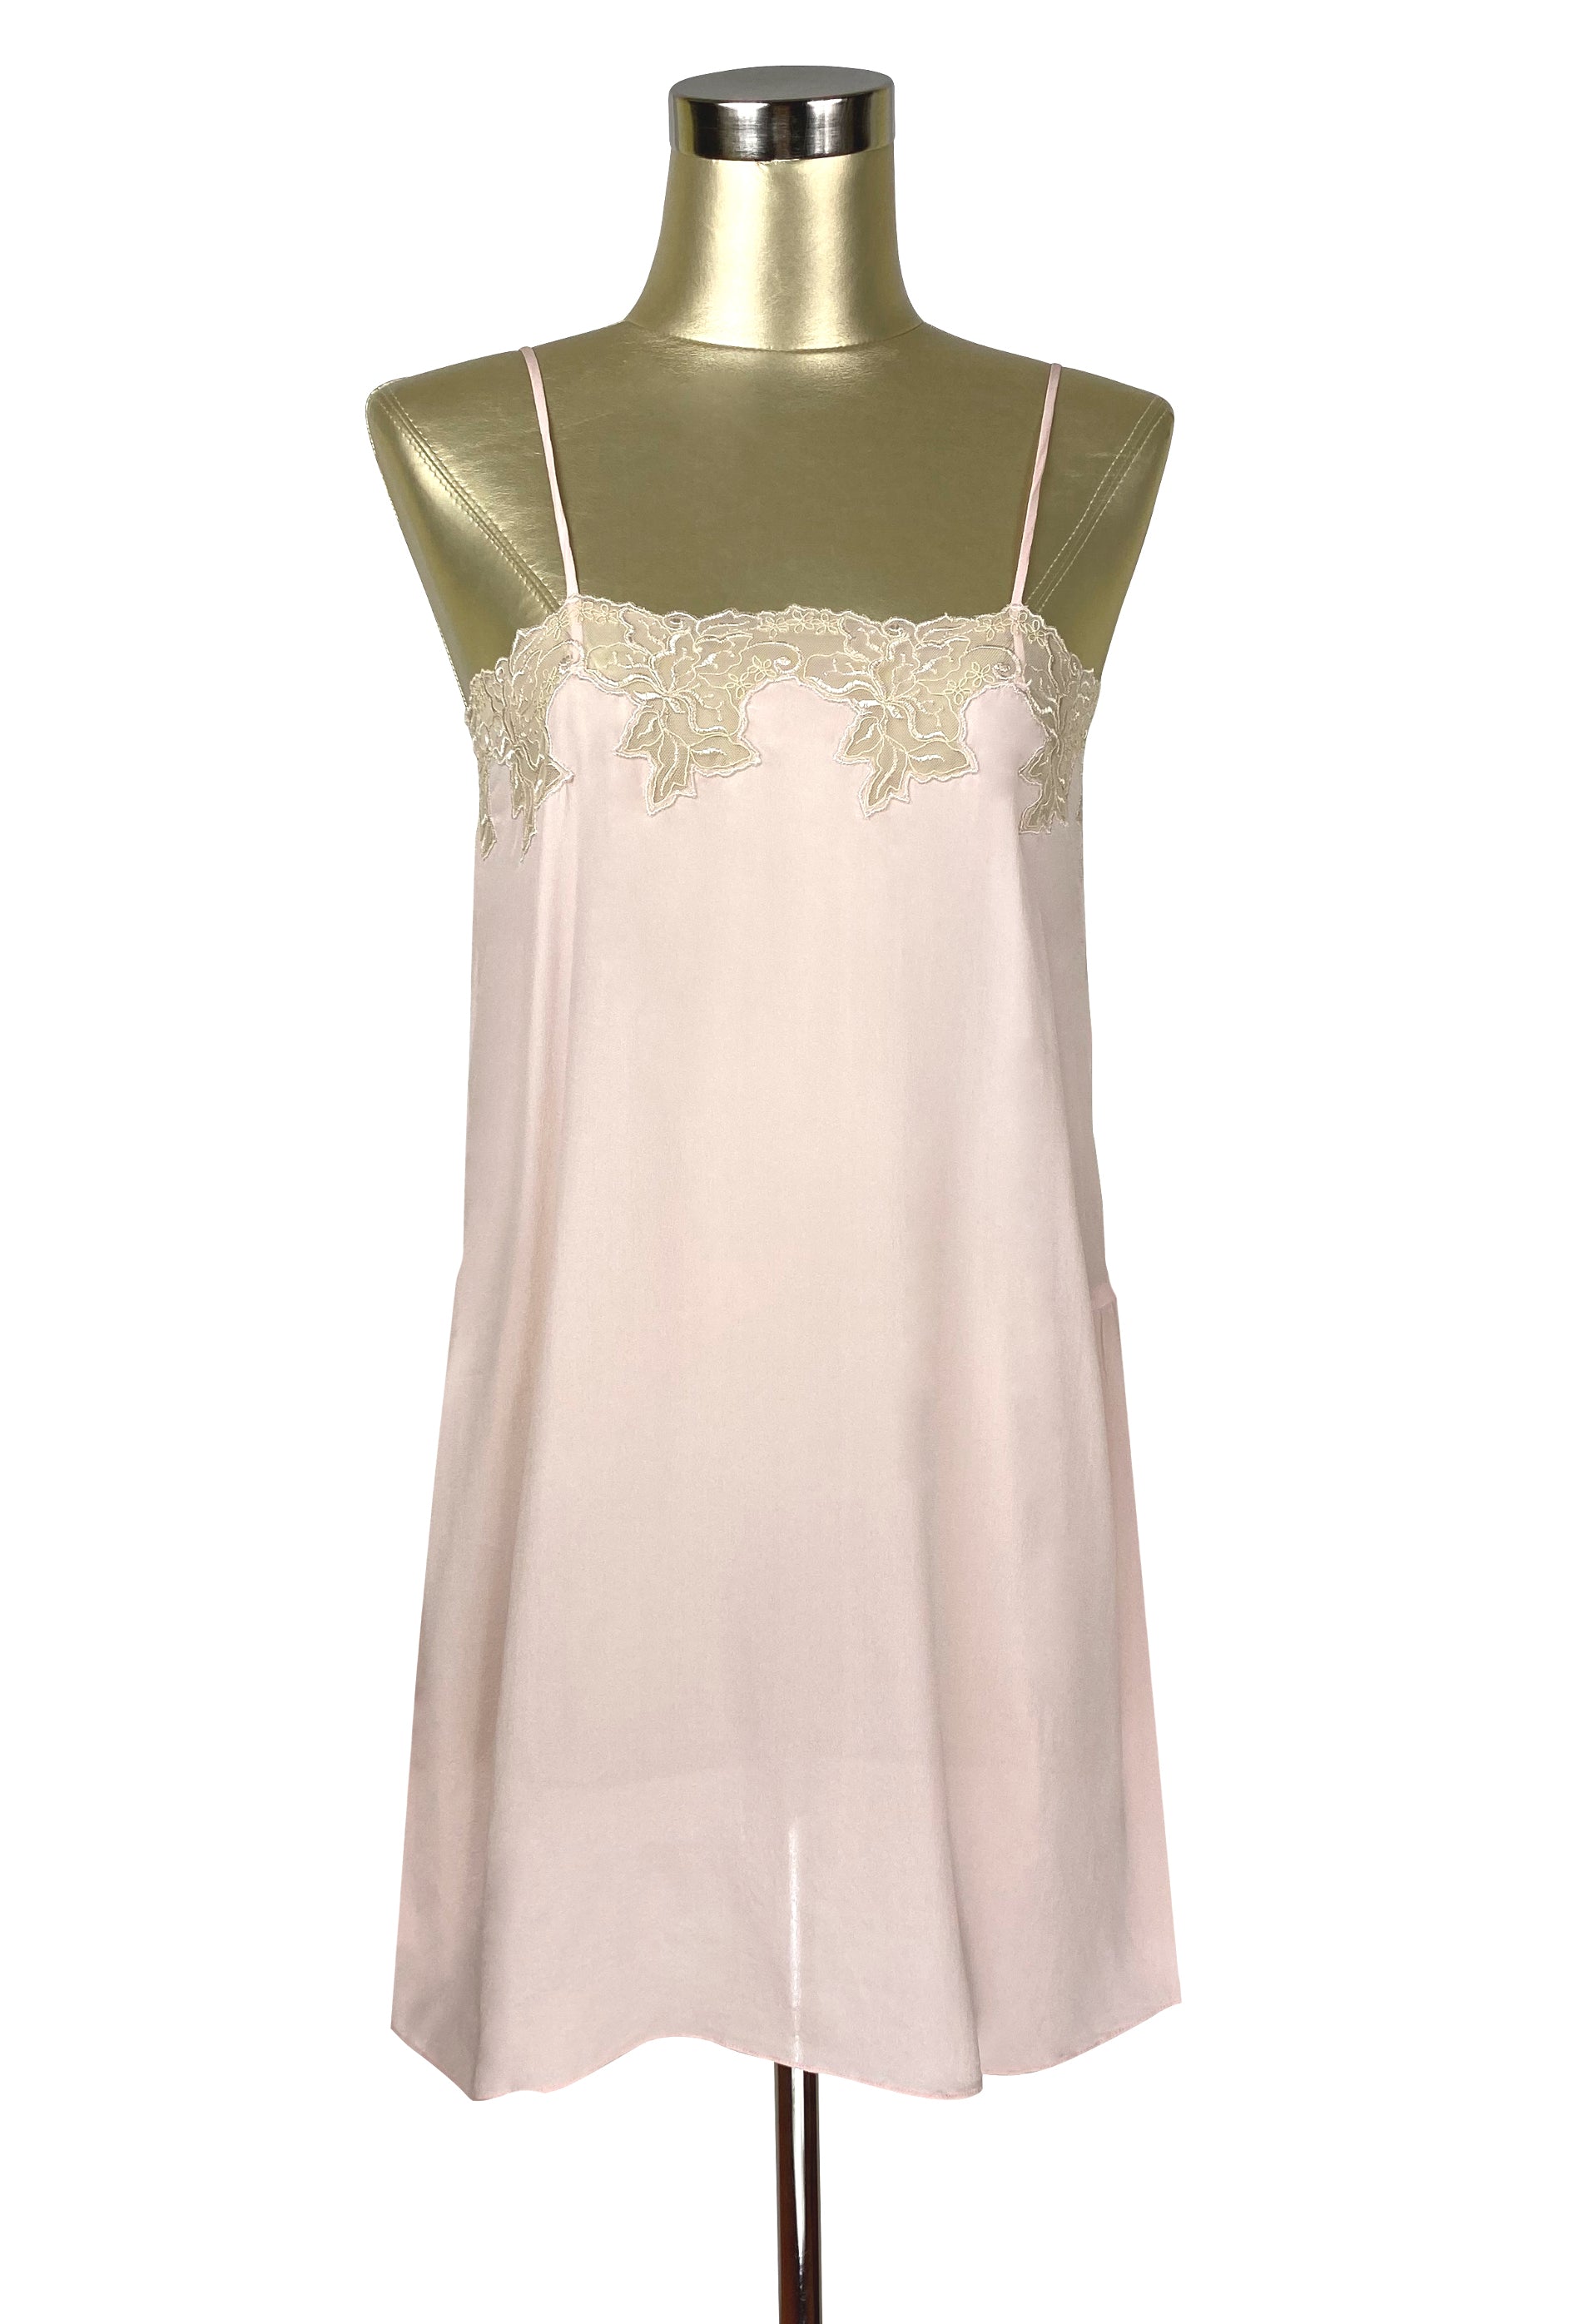 1920's Style 100% Silk Hand-Cut Lace Luxury Slip Dress - Champagne Pin